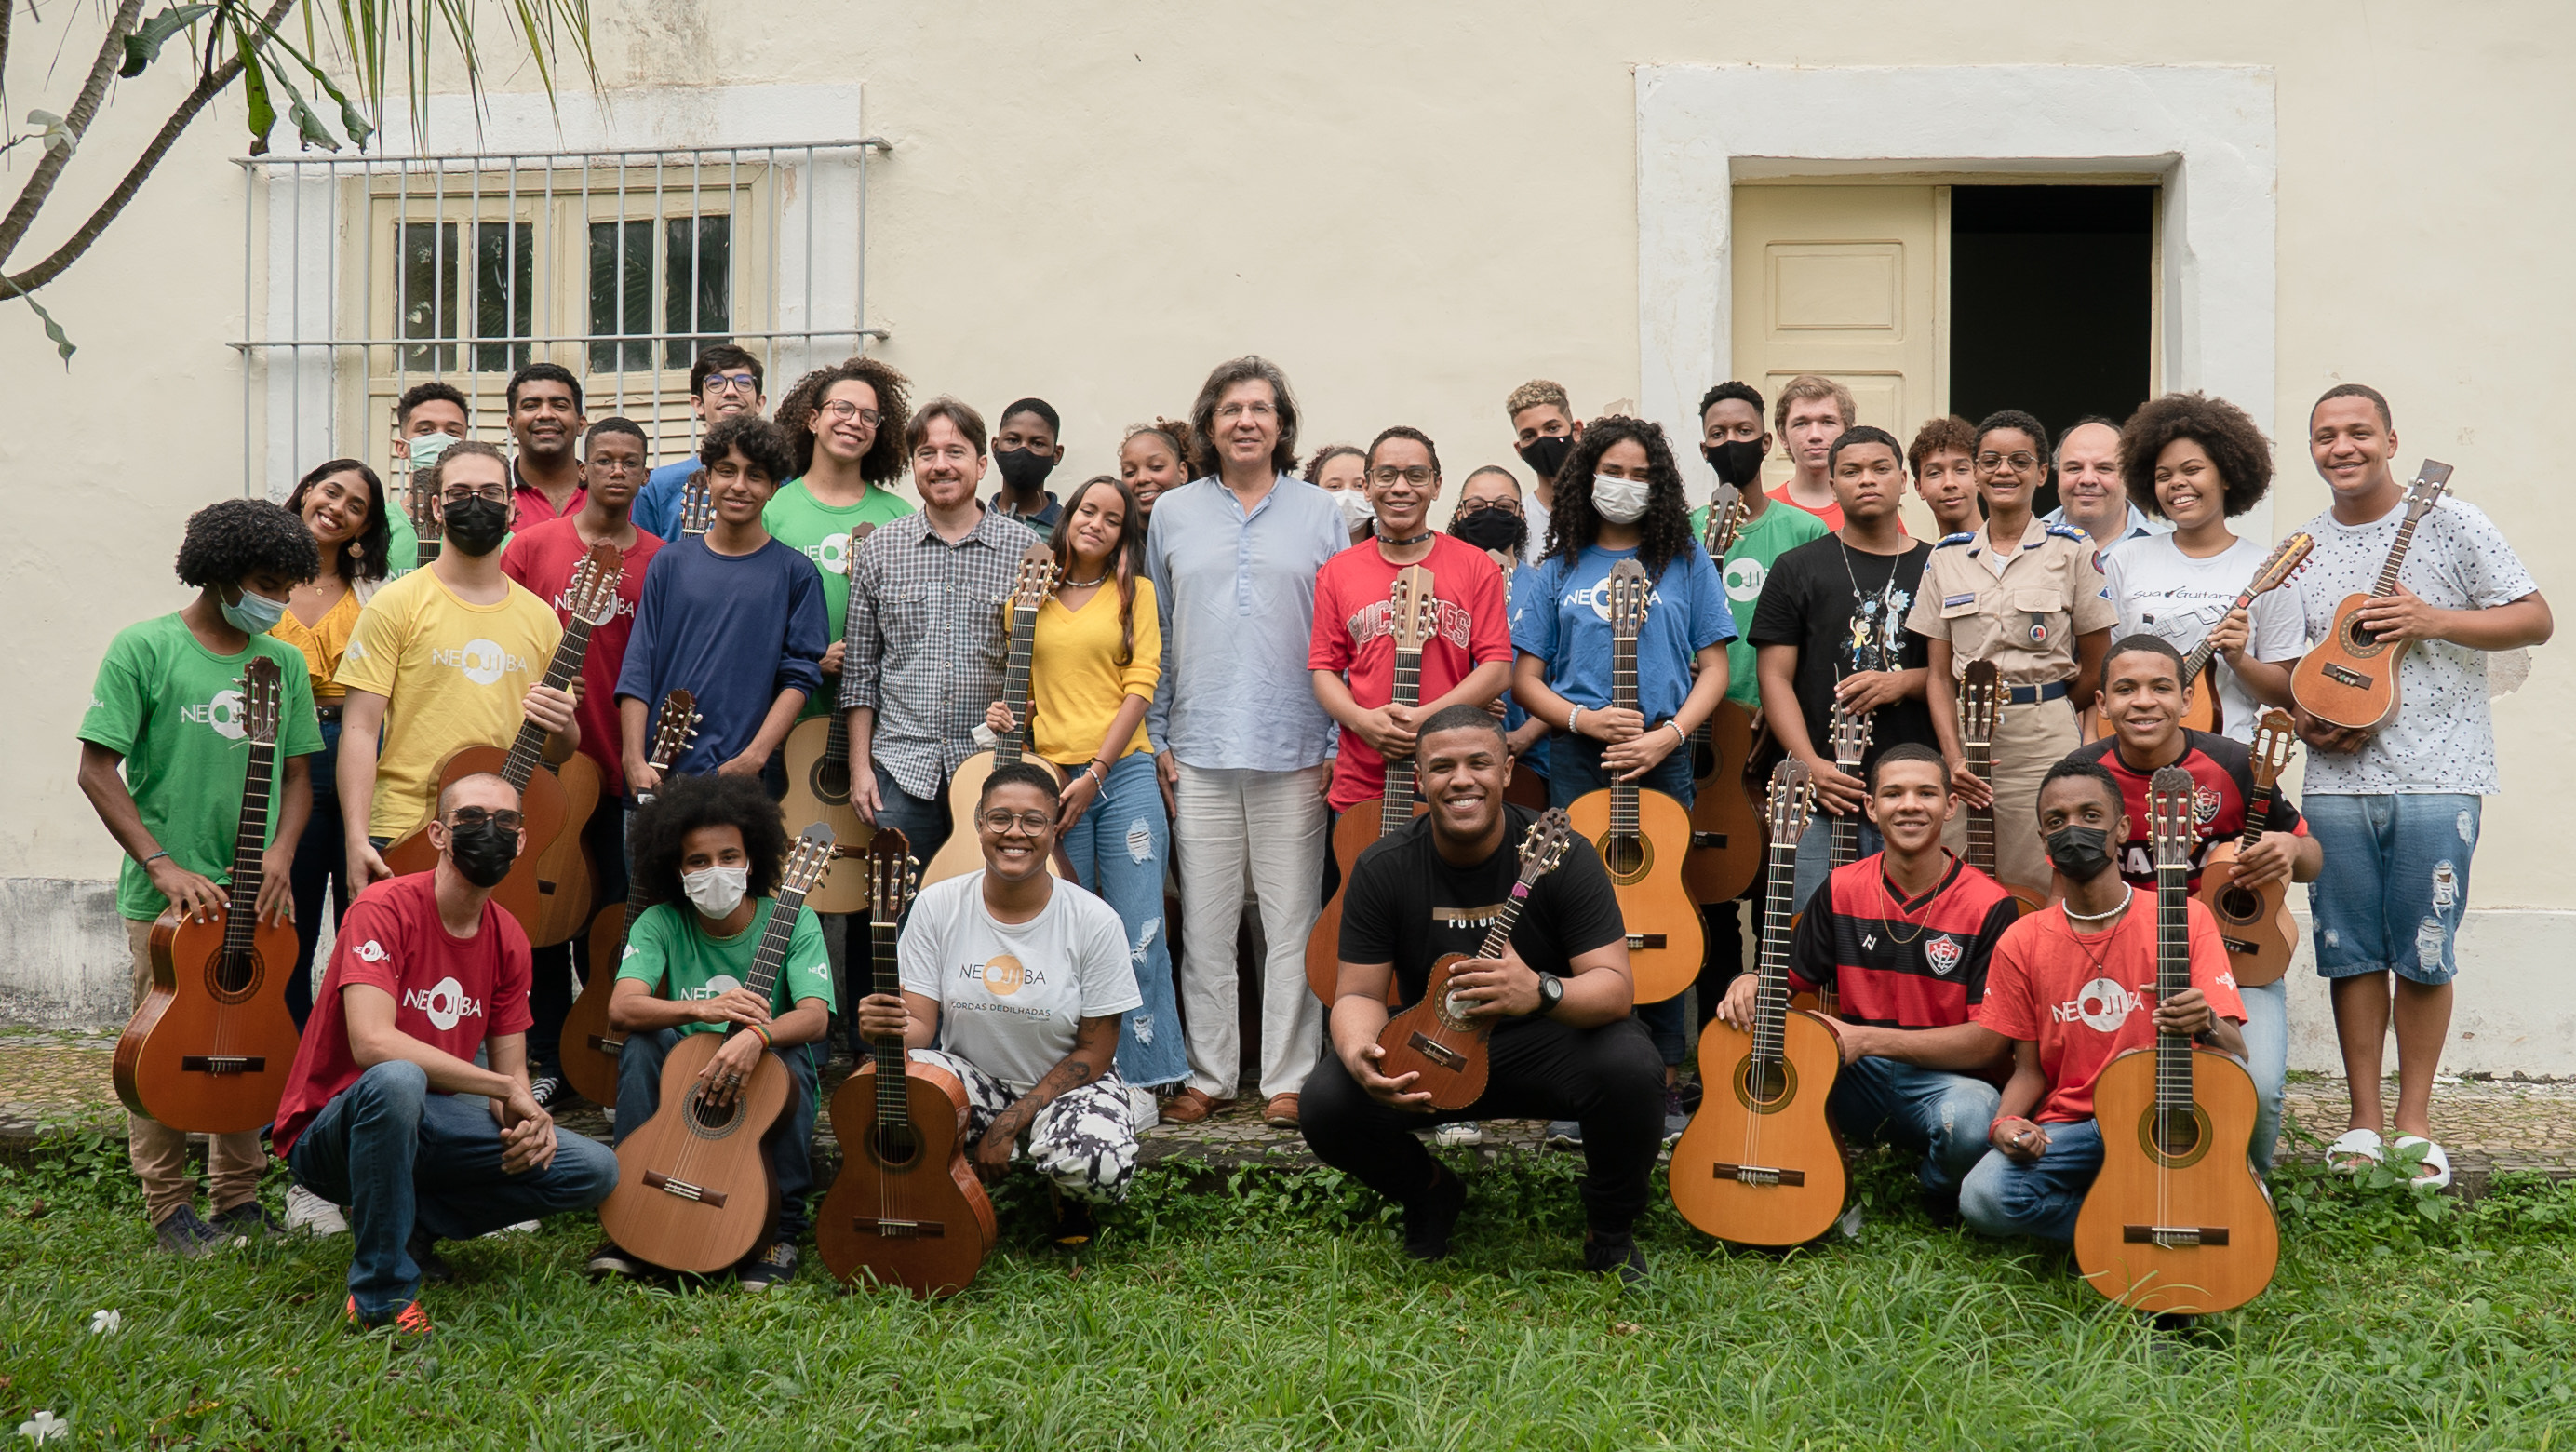 Dobrado Magnata - Banda Sinfônica NEOJIBA - Teatro Castro Alves. 